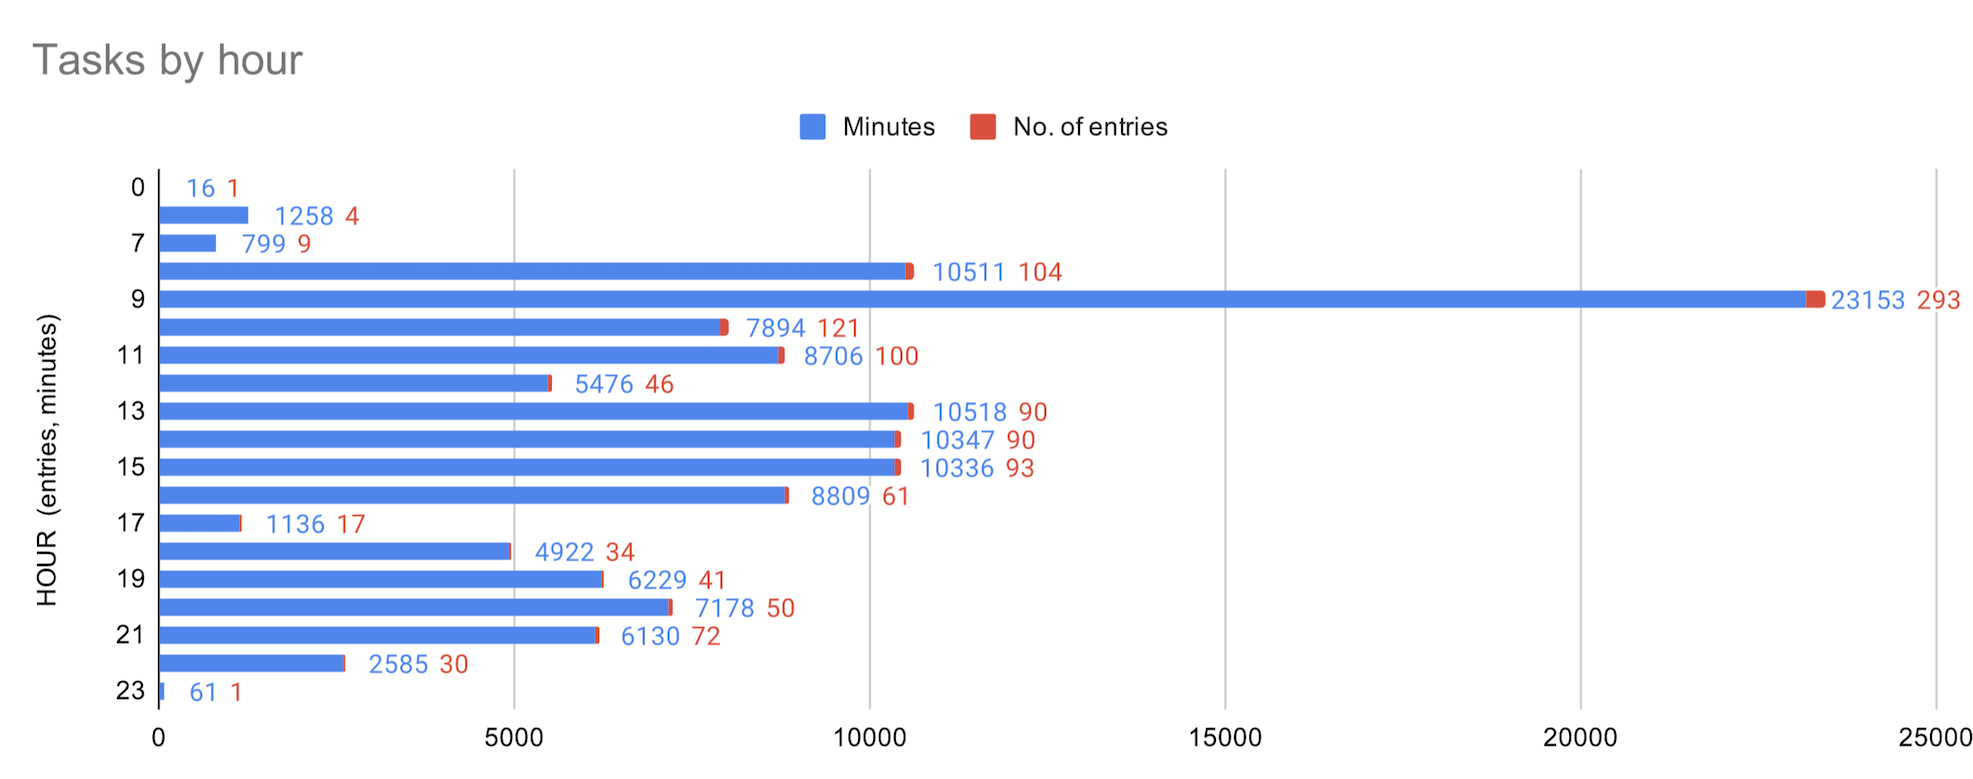 tasks by hour - bar chart